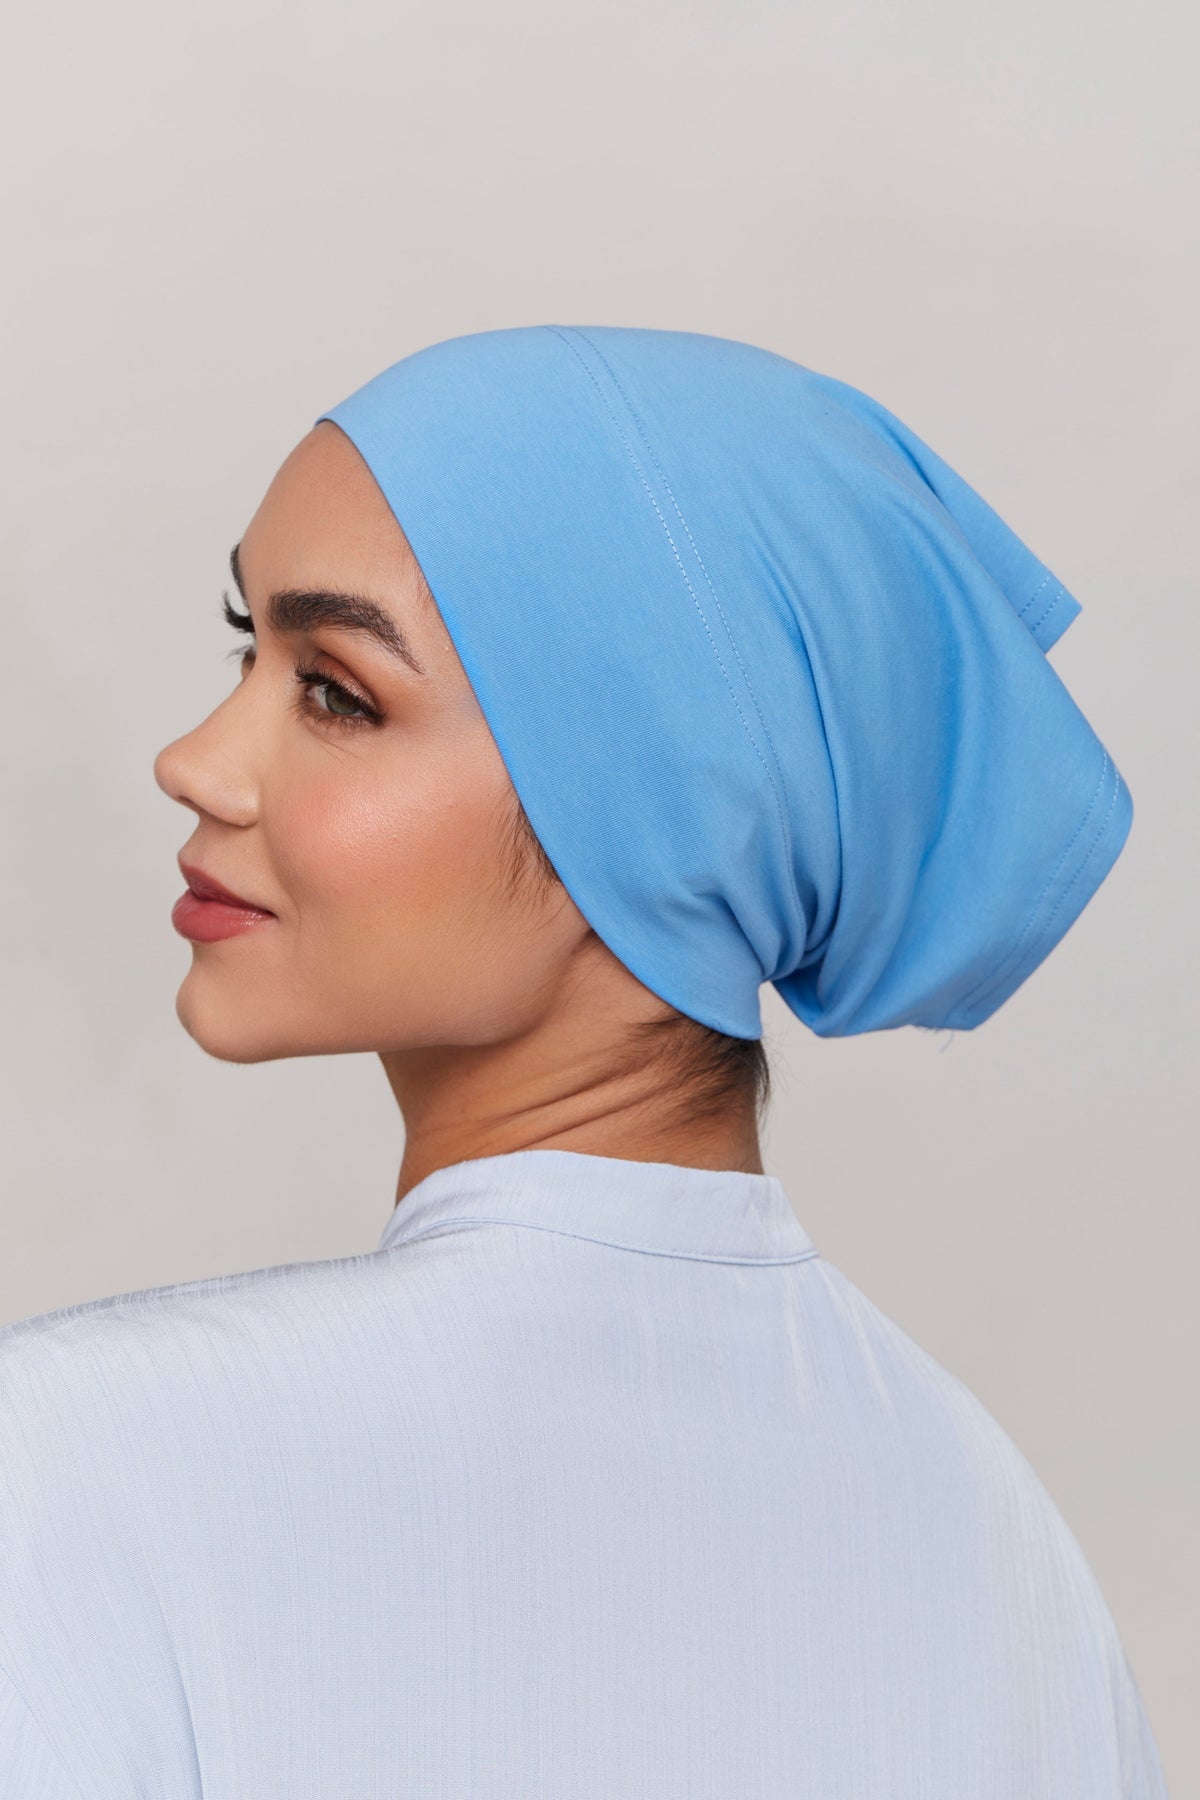 PHOGARY 4 Pcs Women Hijab Undercap, Islamic Muslim Under Hijab Cap Inner Under Scarf Hat Hijab Cap with Tie Back Closure